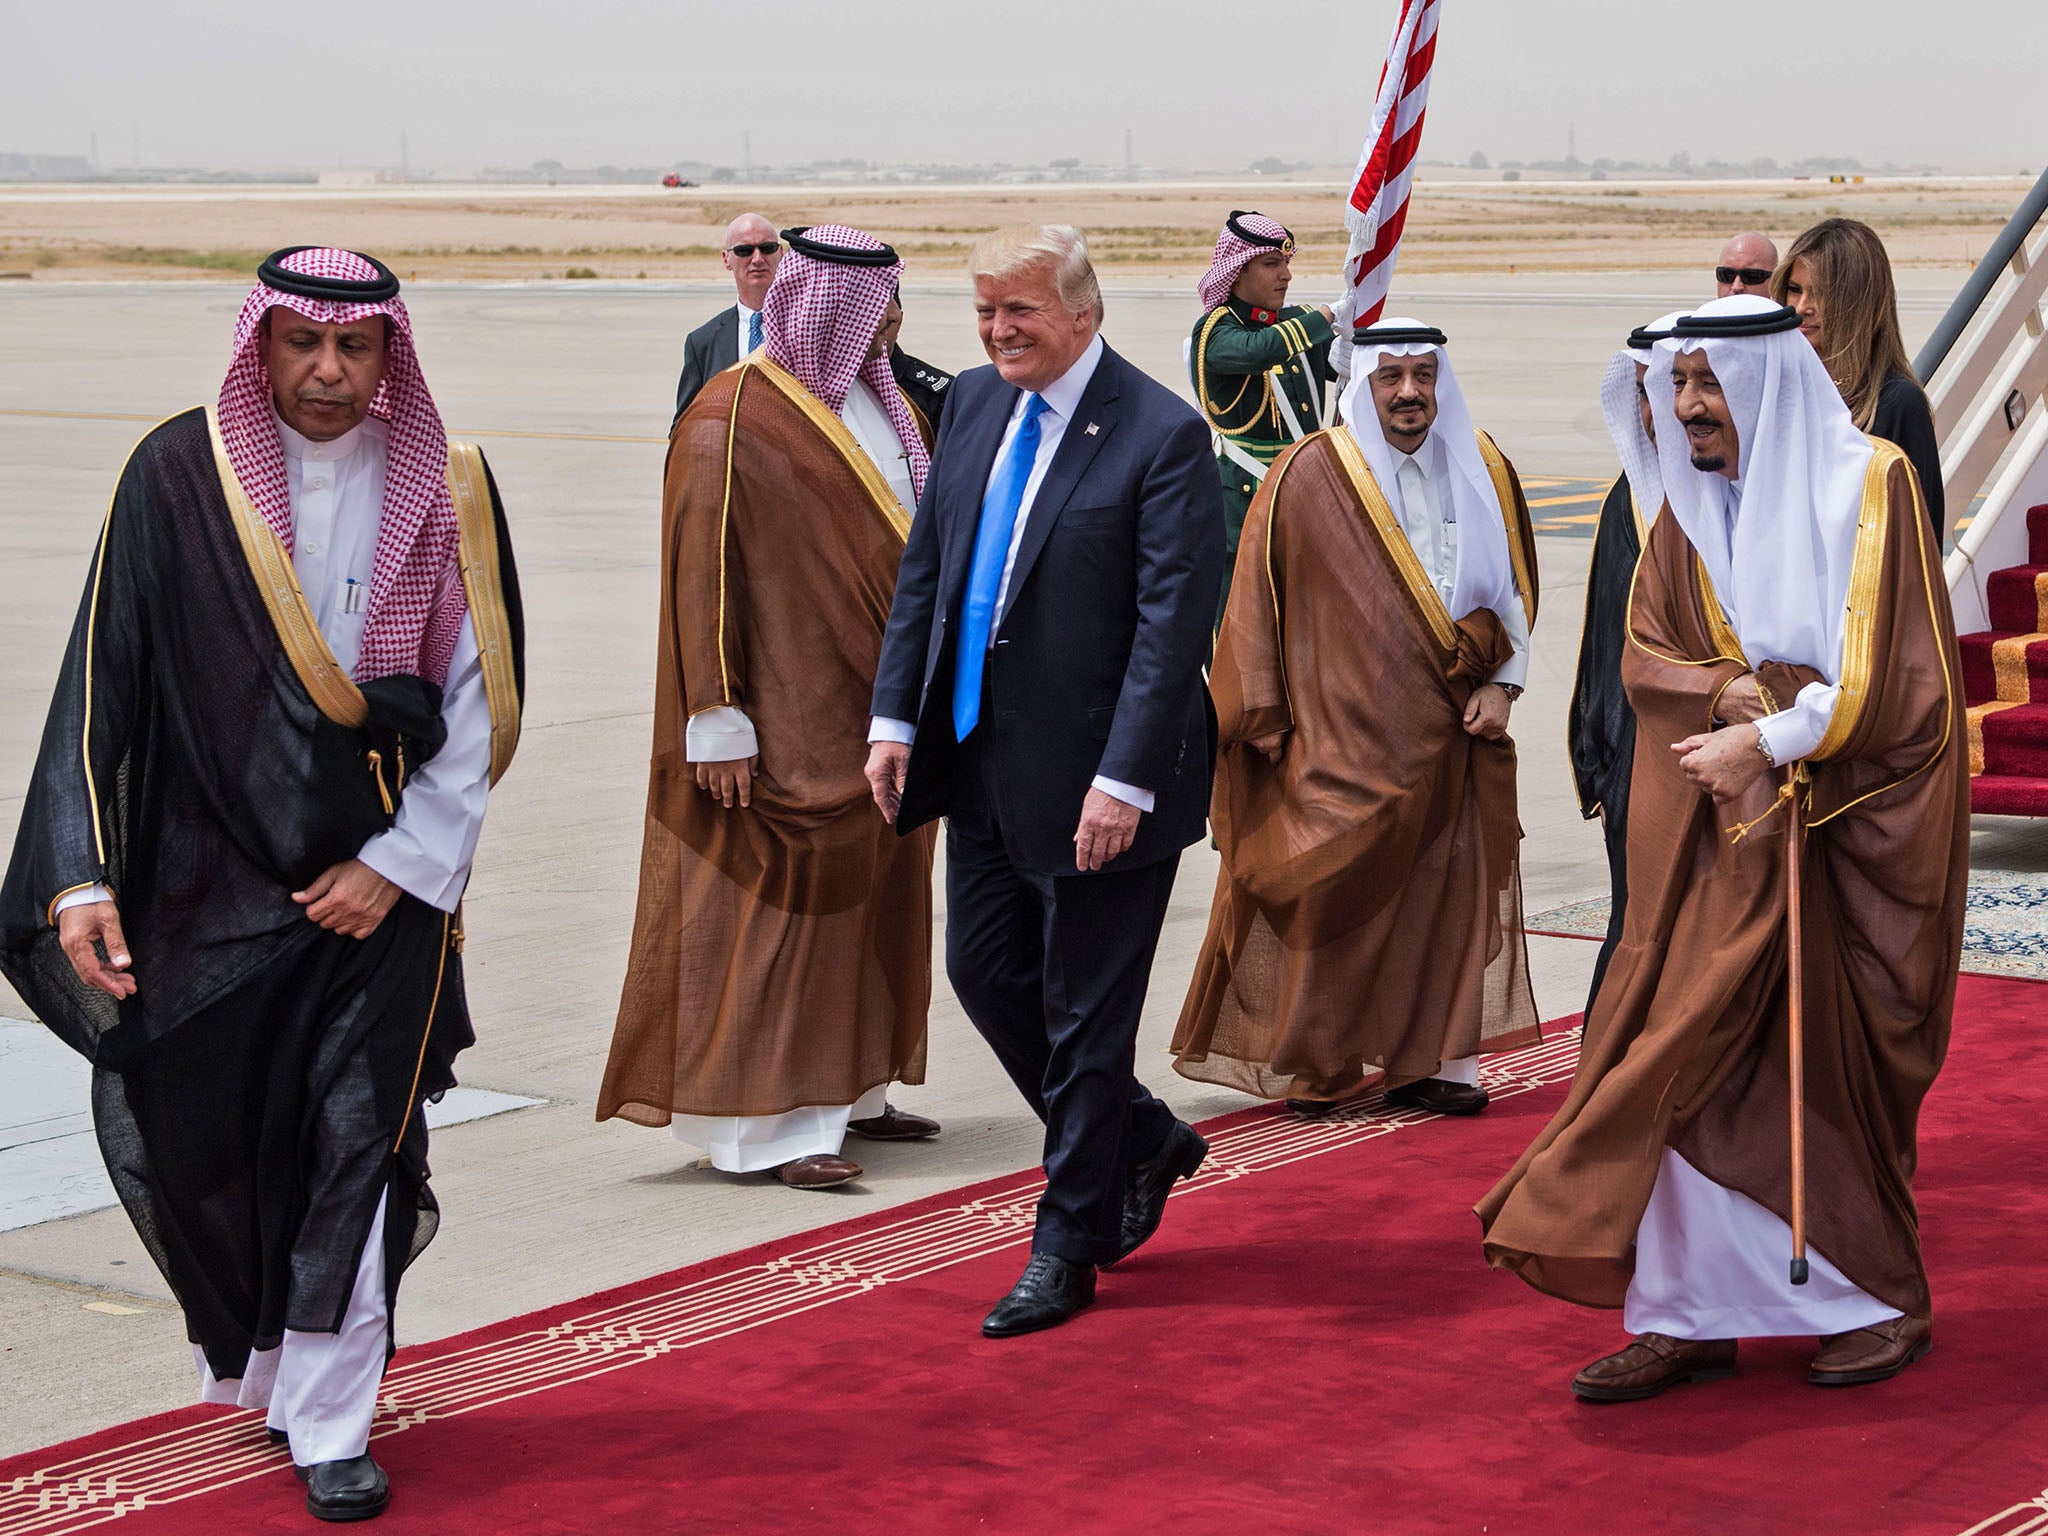 Donald Trump is welcomed by Saudi King Salman bin Abdulaziz Al Saud during a visit earlier this year